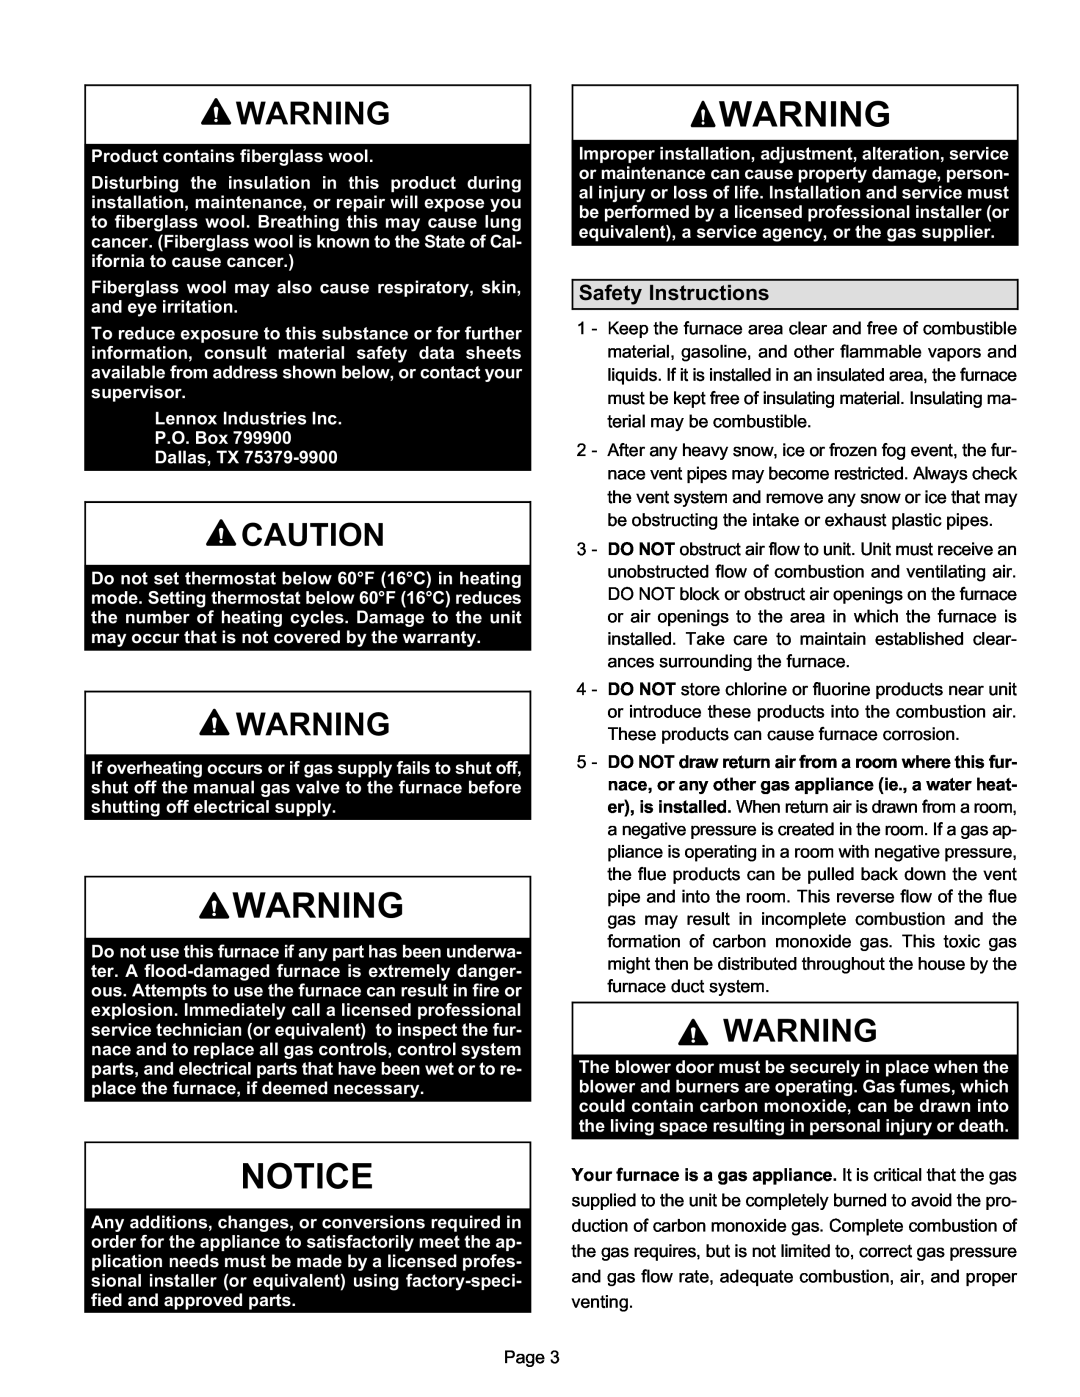 Lennox International Inc Variable Capacity Gas Furnace, SLP98DFV manual Safety Instructions 